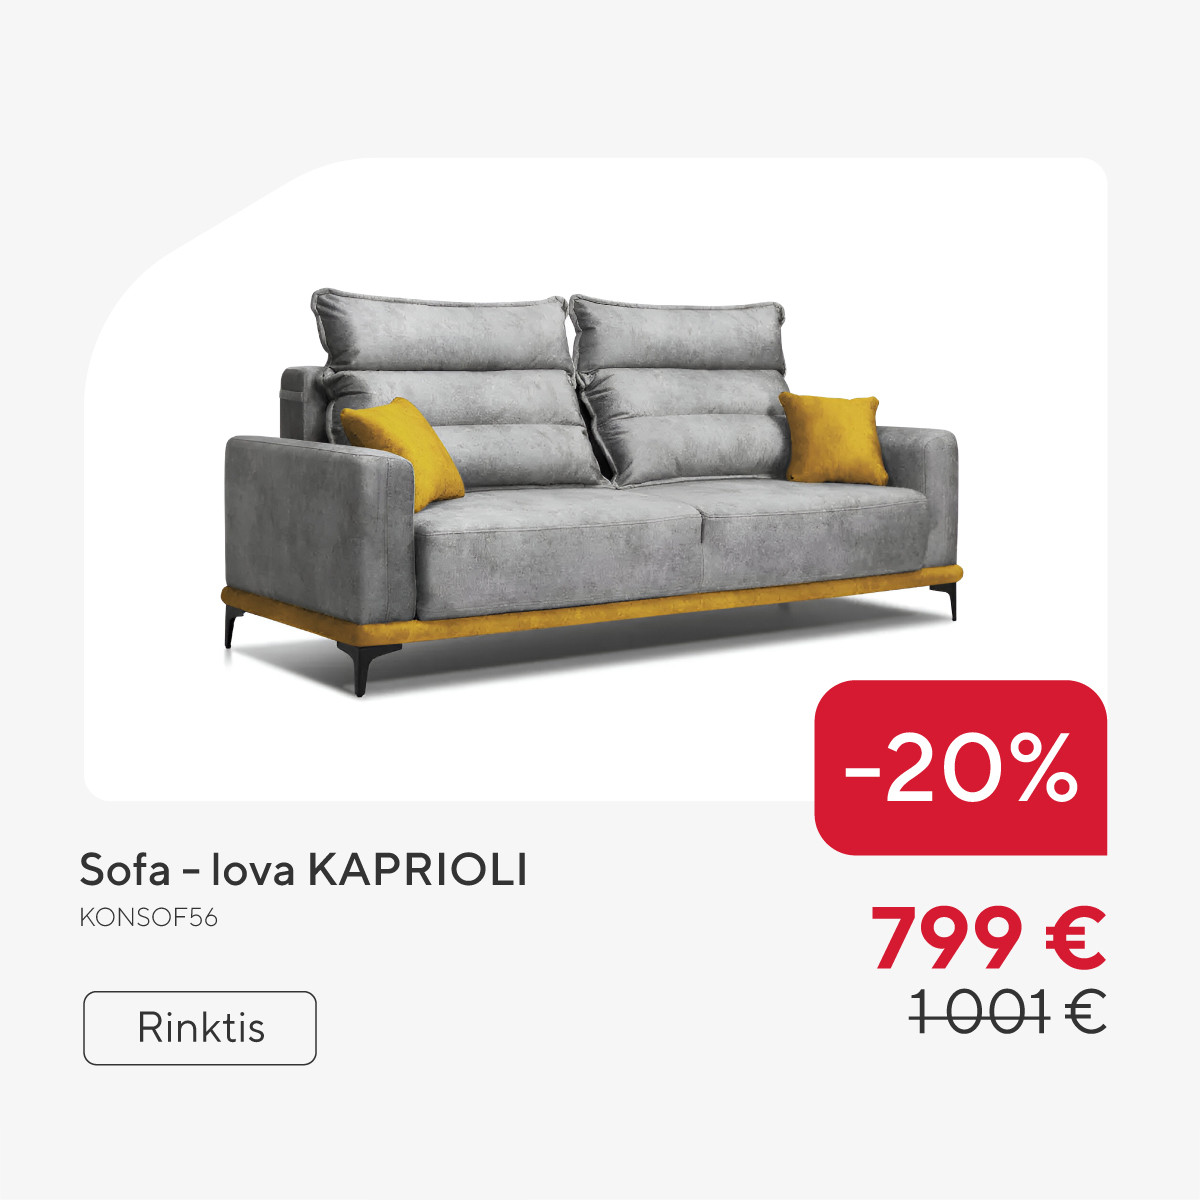 Sofa - lova KAPRIOLI